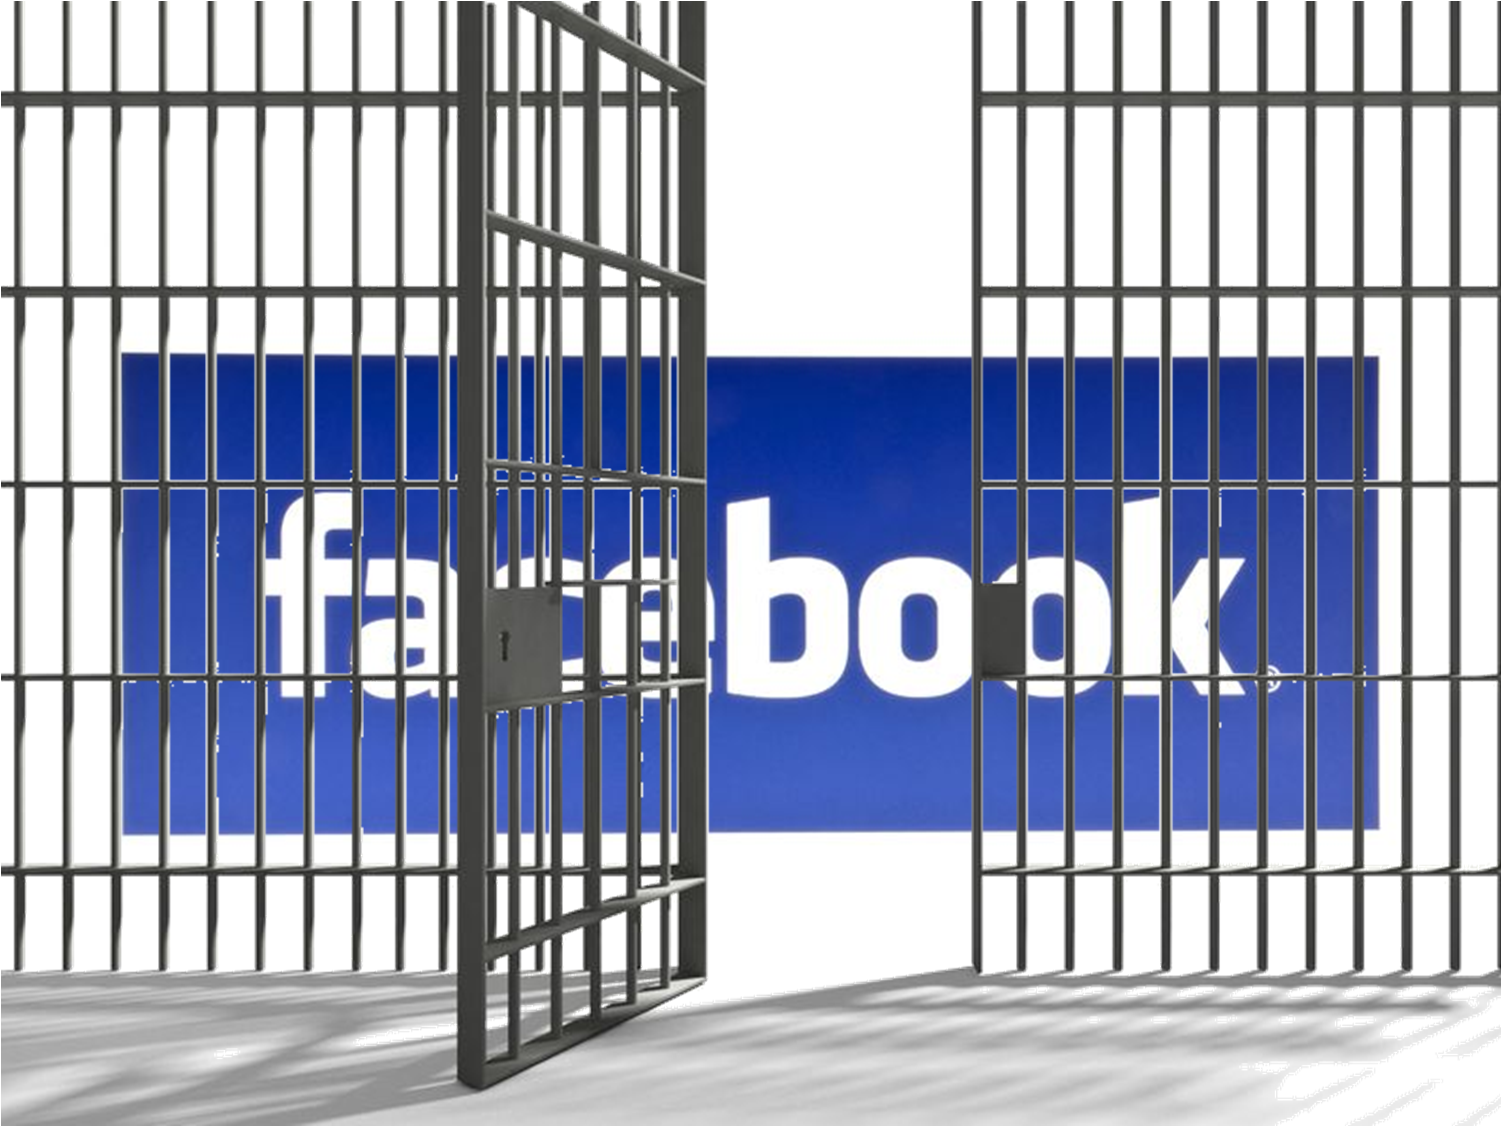 facebook jail